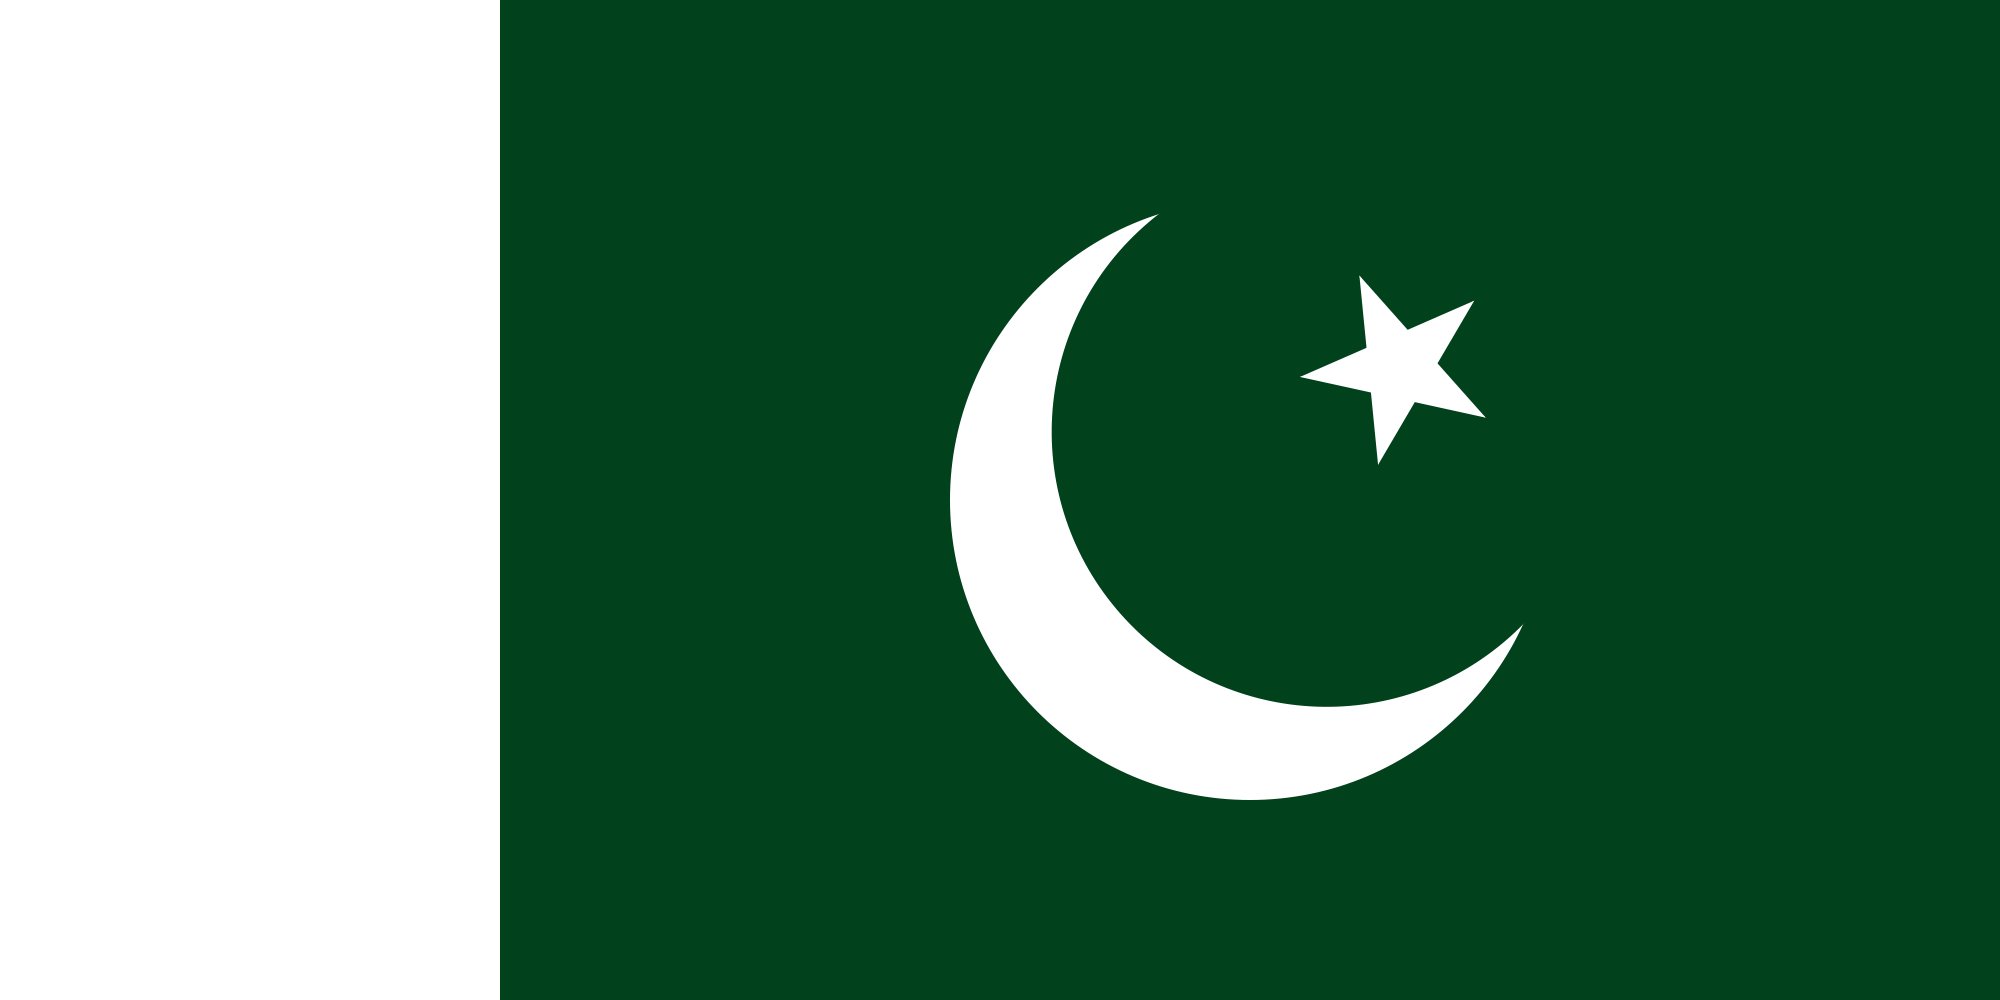 Pakistan (Naval ensign)